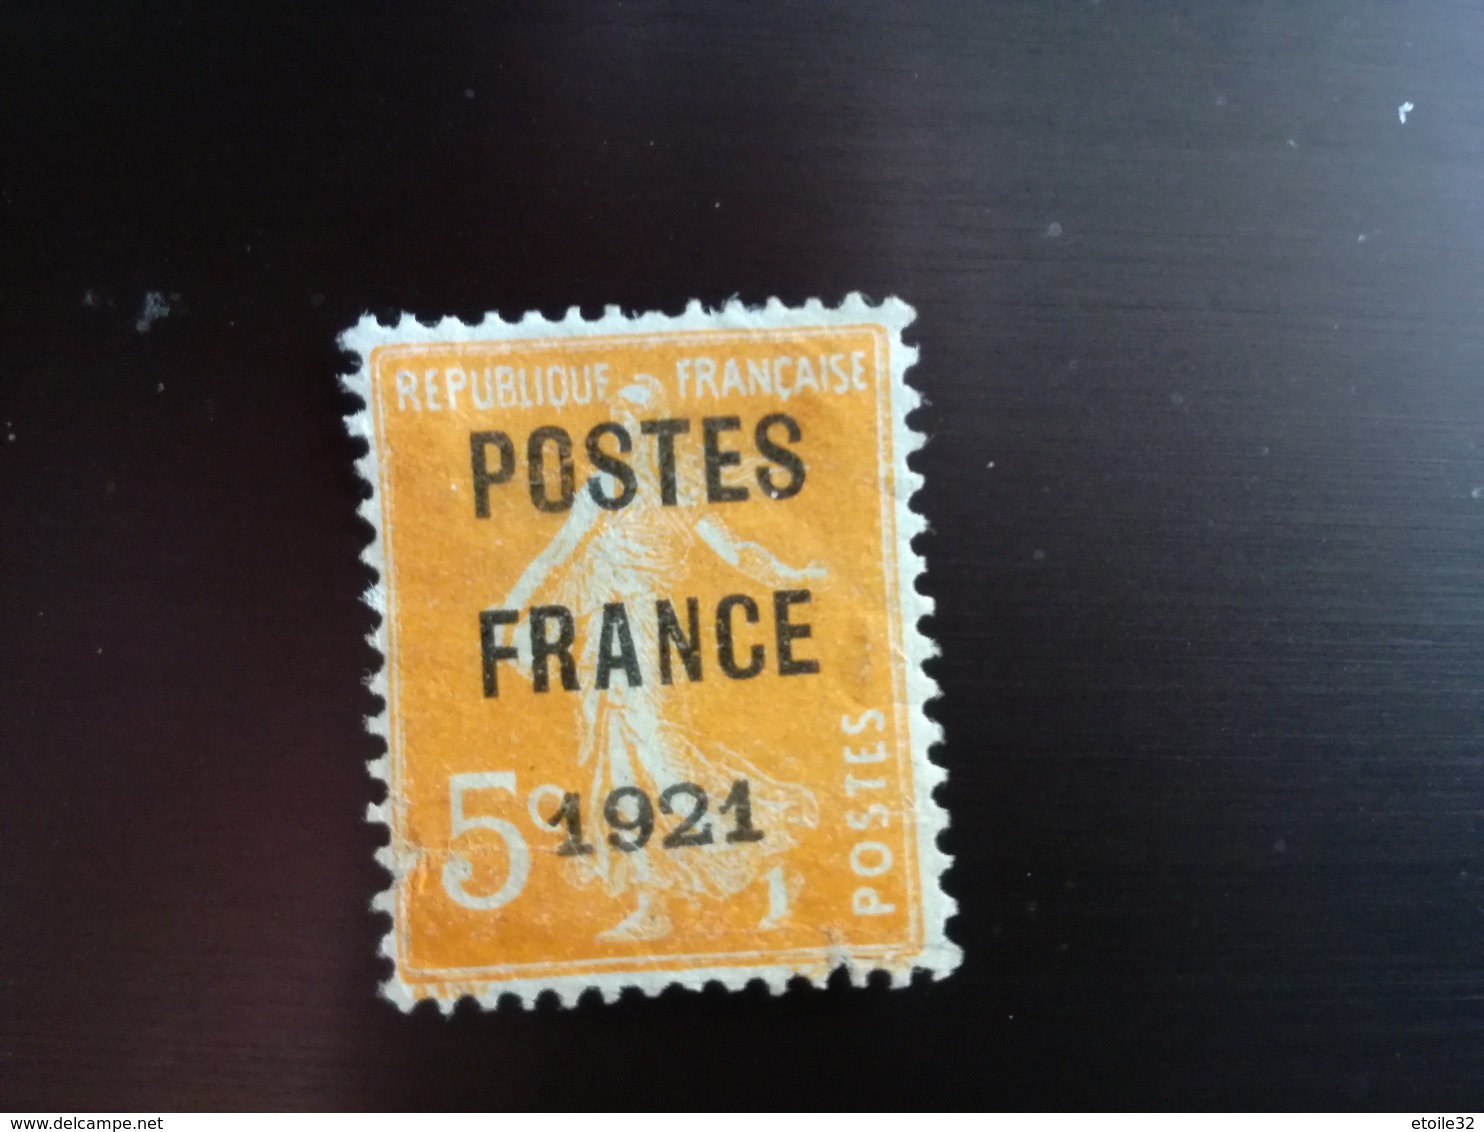 FRANCE Préo POSTES FRANCE 1921 NSG - 1849-1850 Ceres